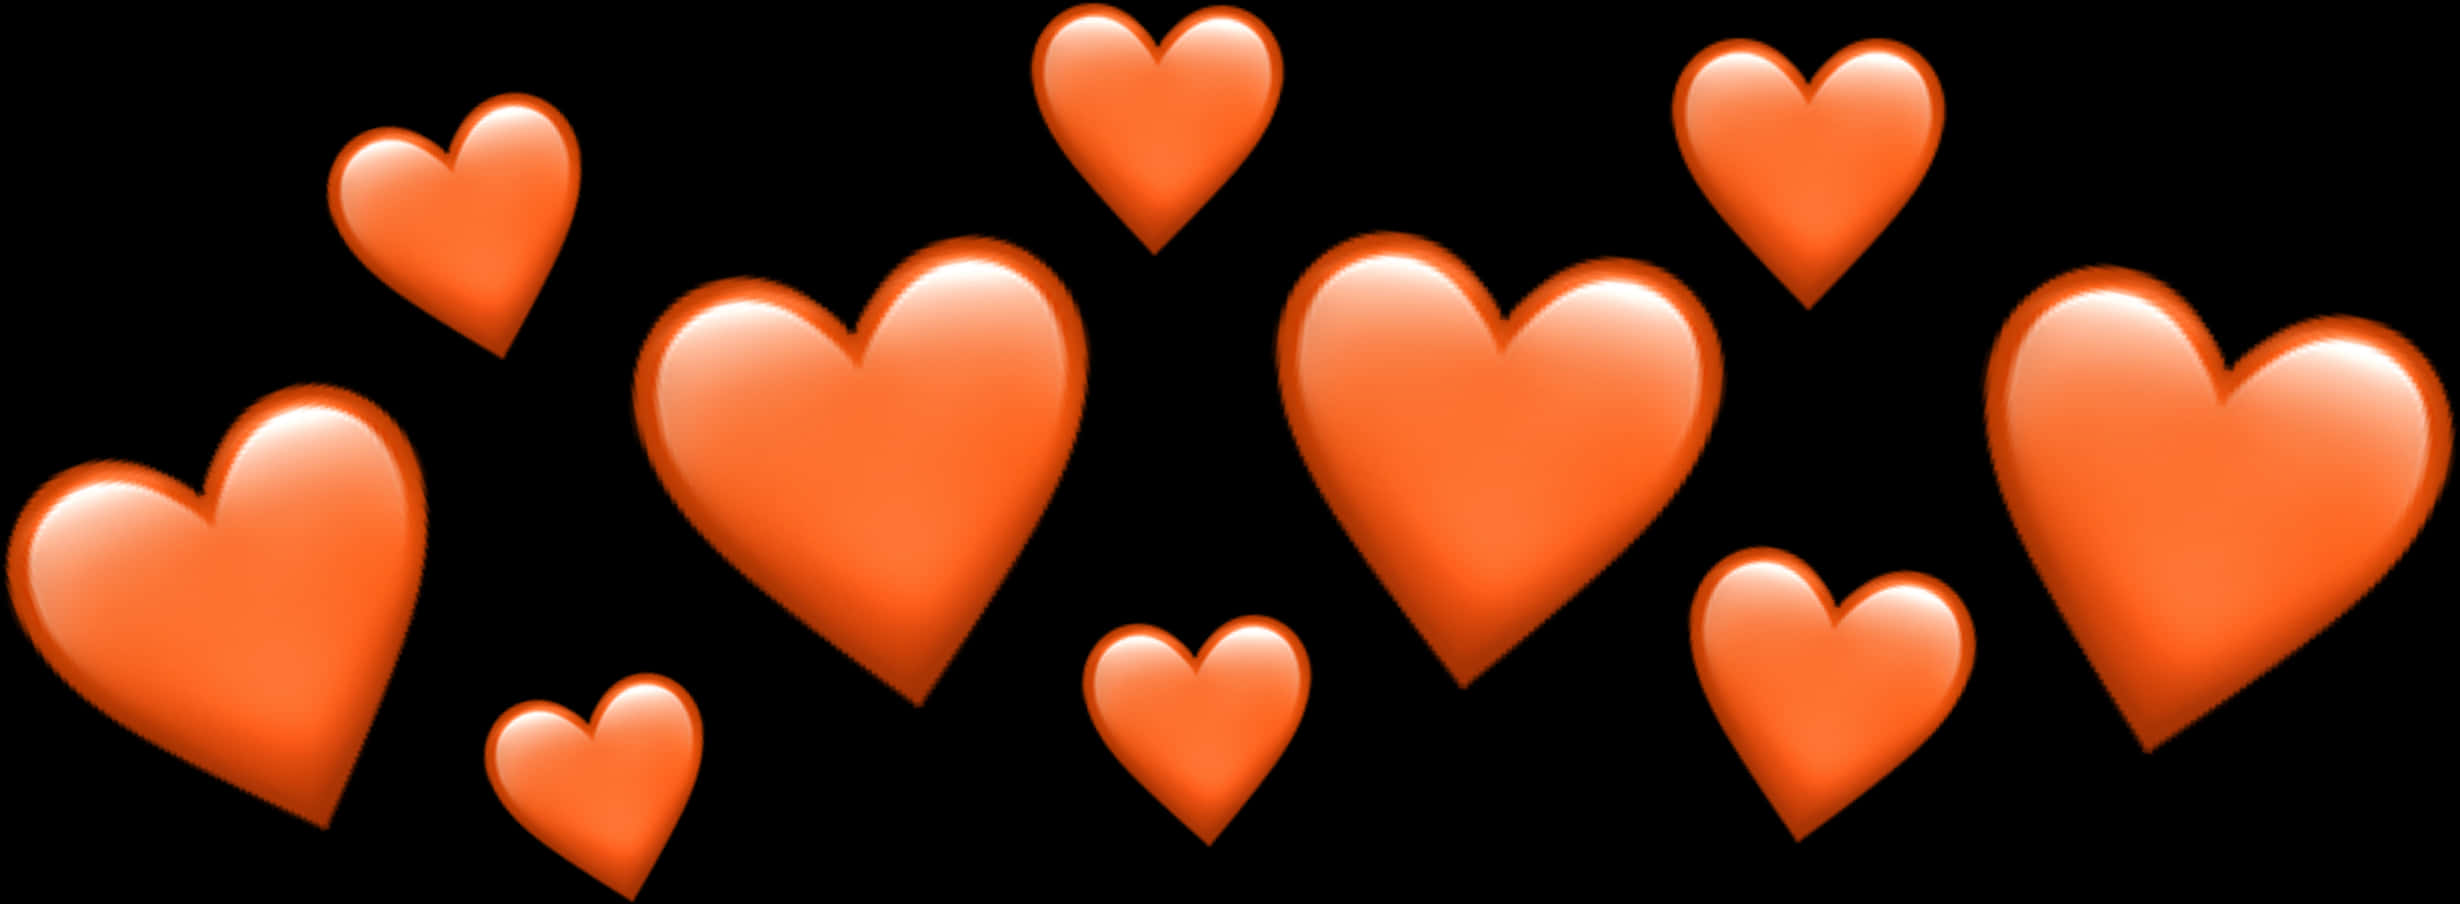 Orange Heart Emojis Black Background PNG